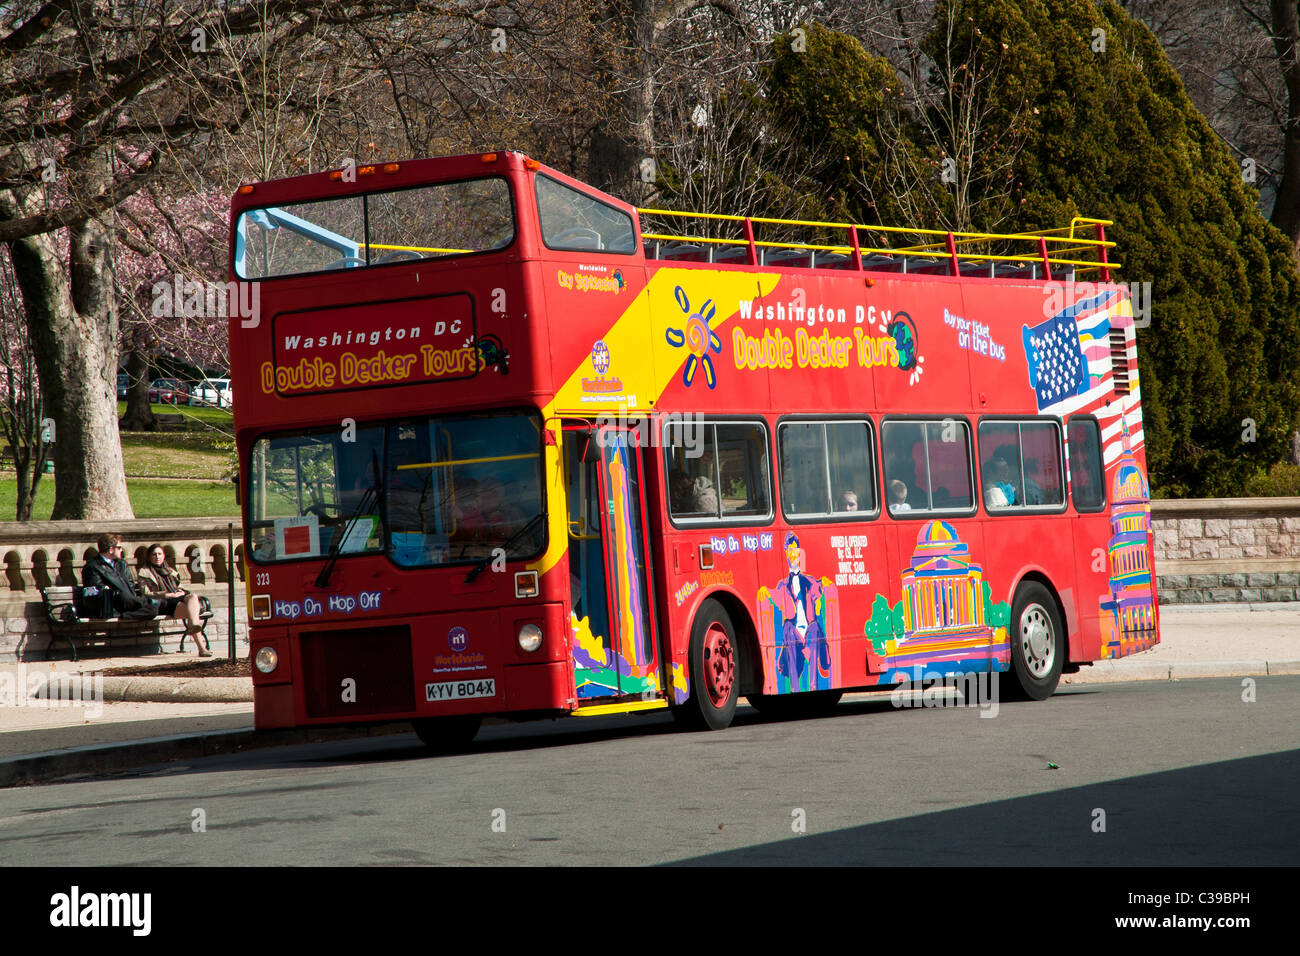 Double decker tour bus in Washington, D.C. Stock Photo